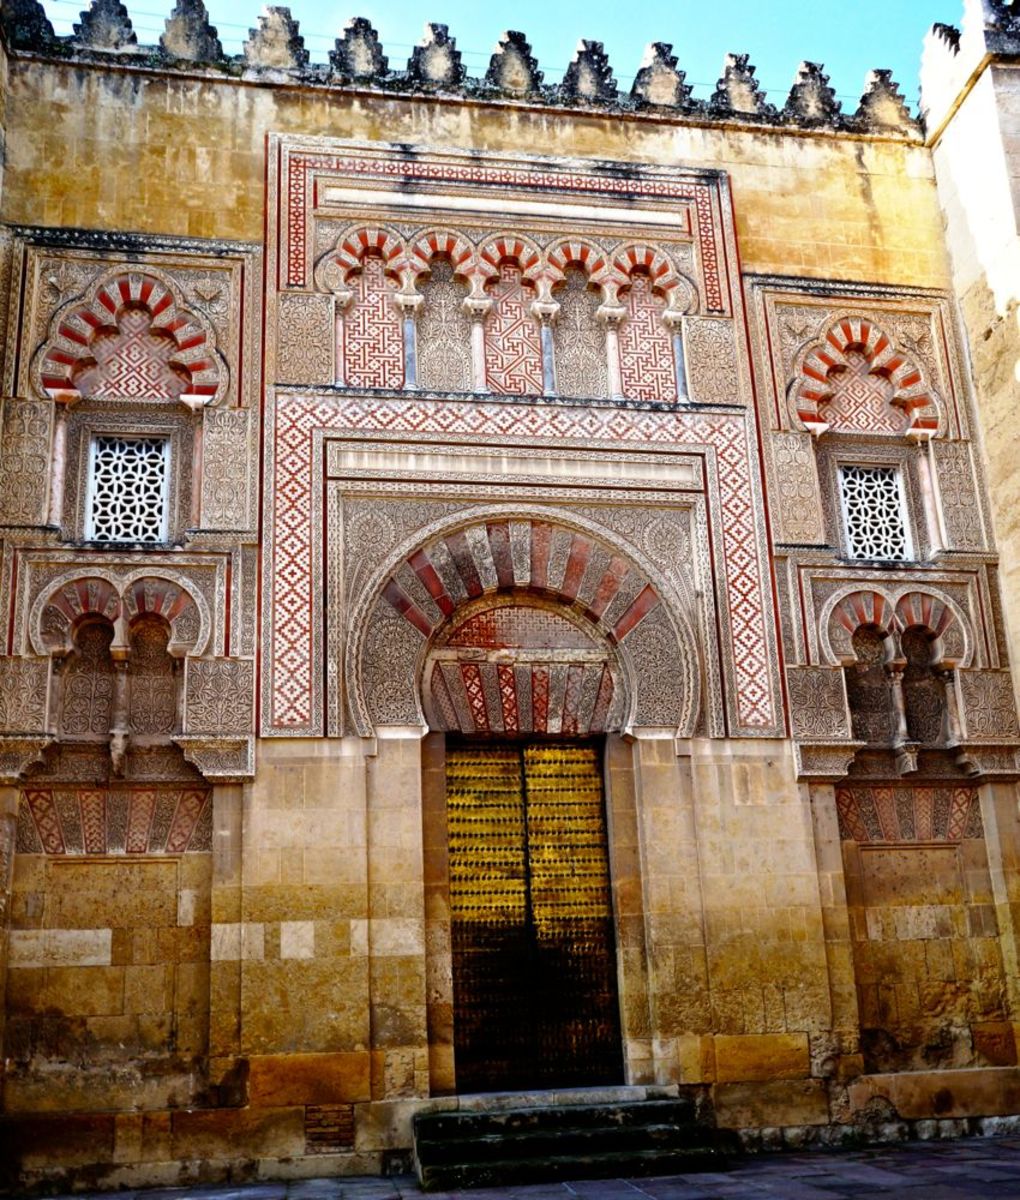 The Mezquita in Cordoba